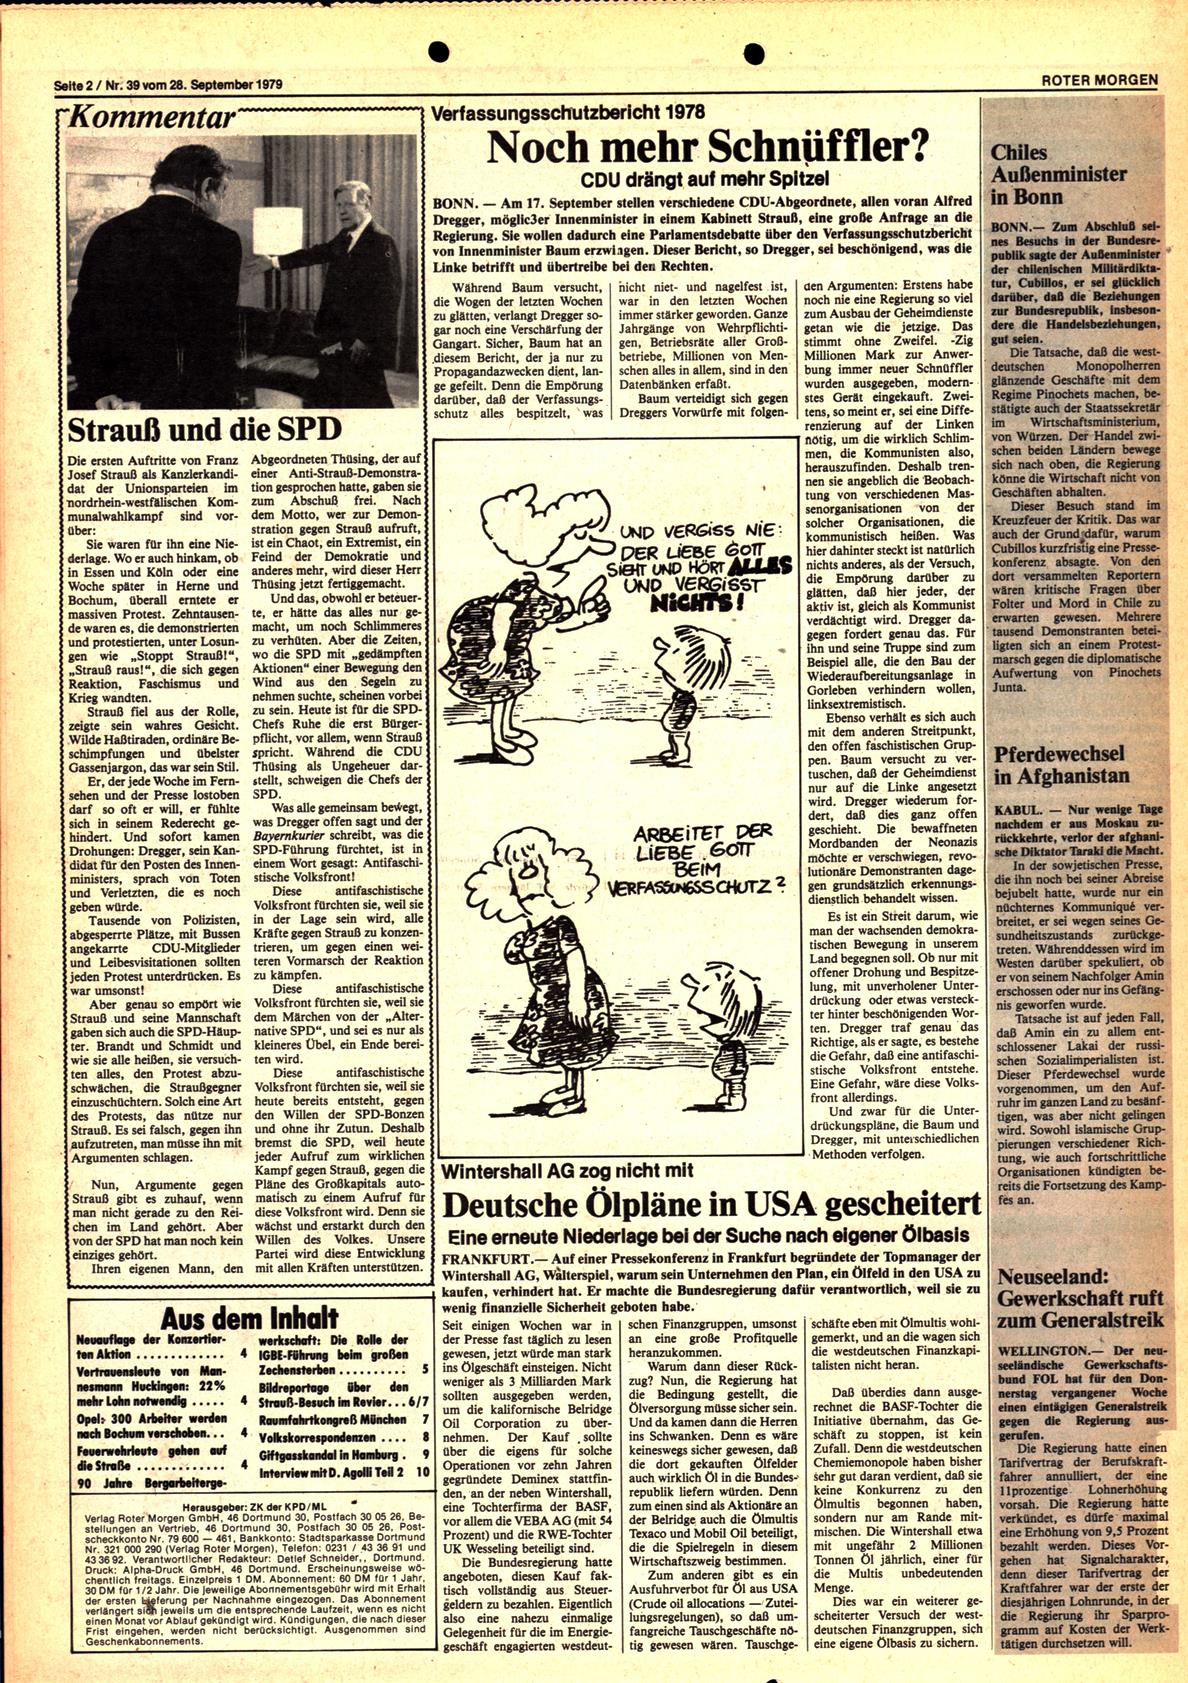 Roter Morgen, 13. Jg., 28. September 1979, Nr. 39, Seite 2